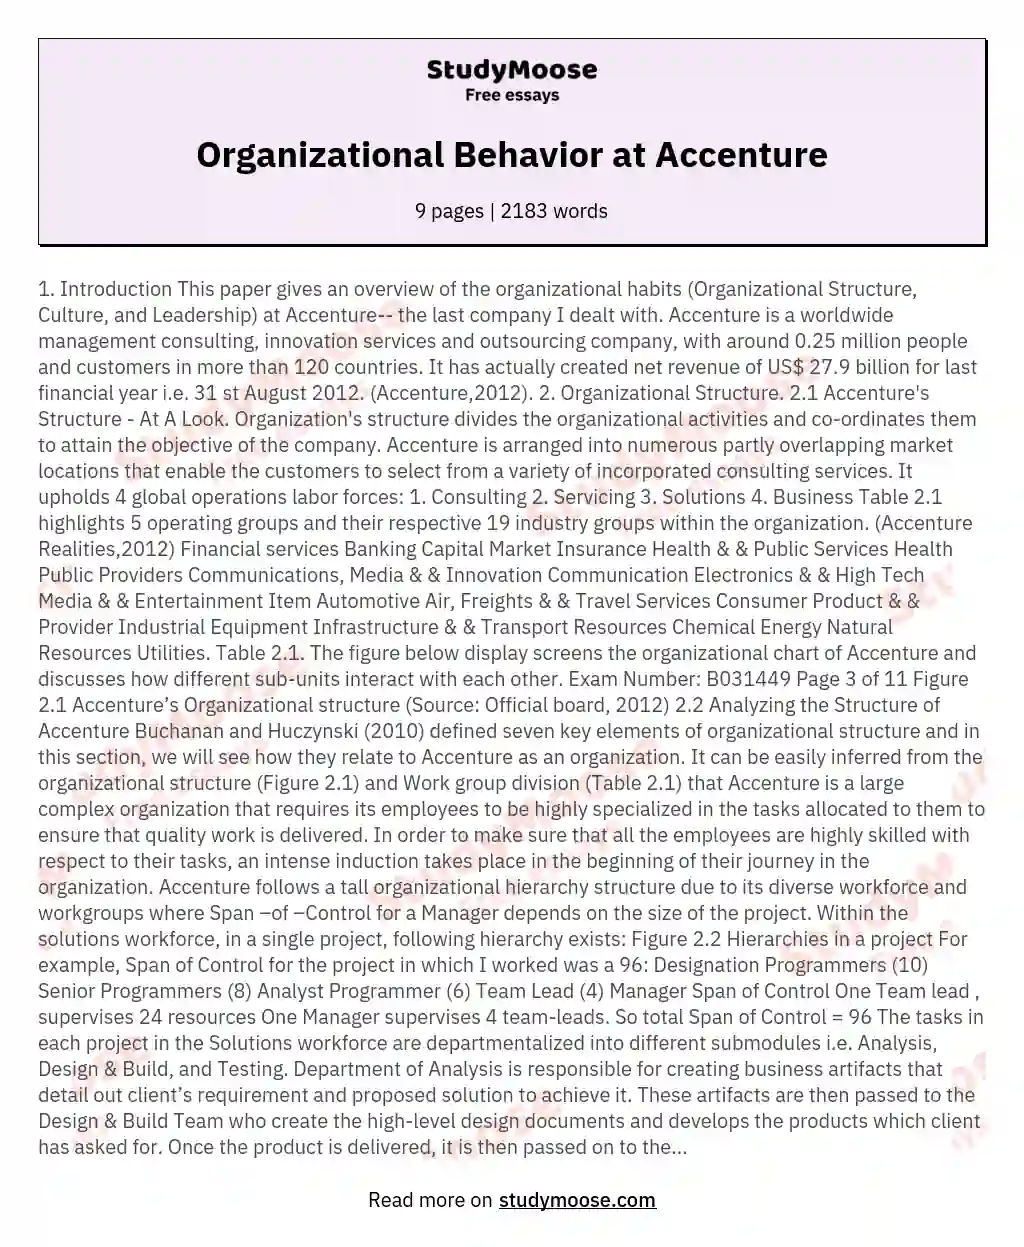 Organizational Behavior at Accenture essay